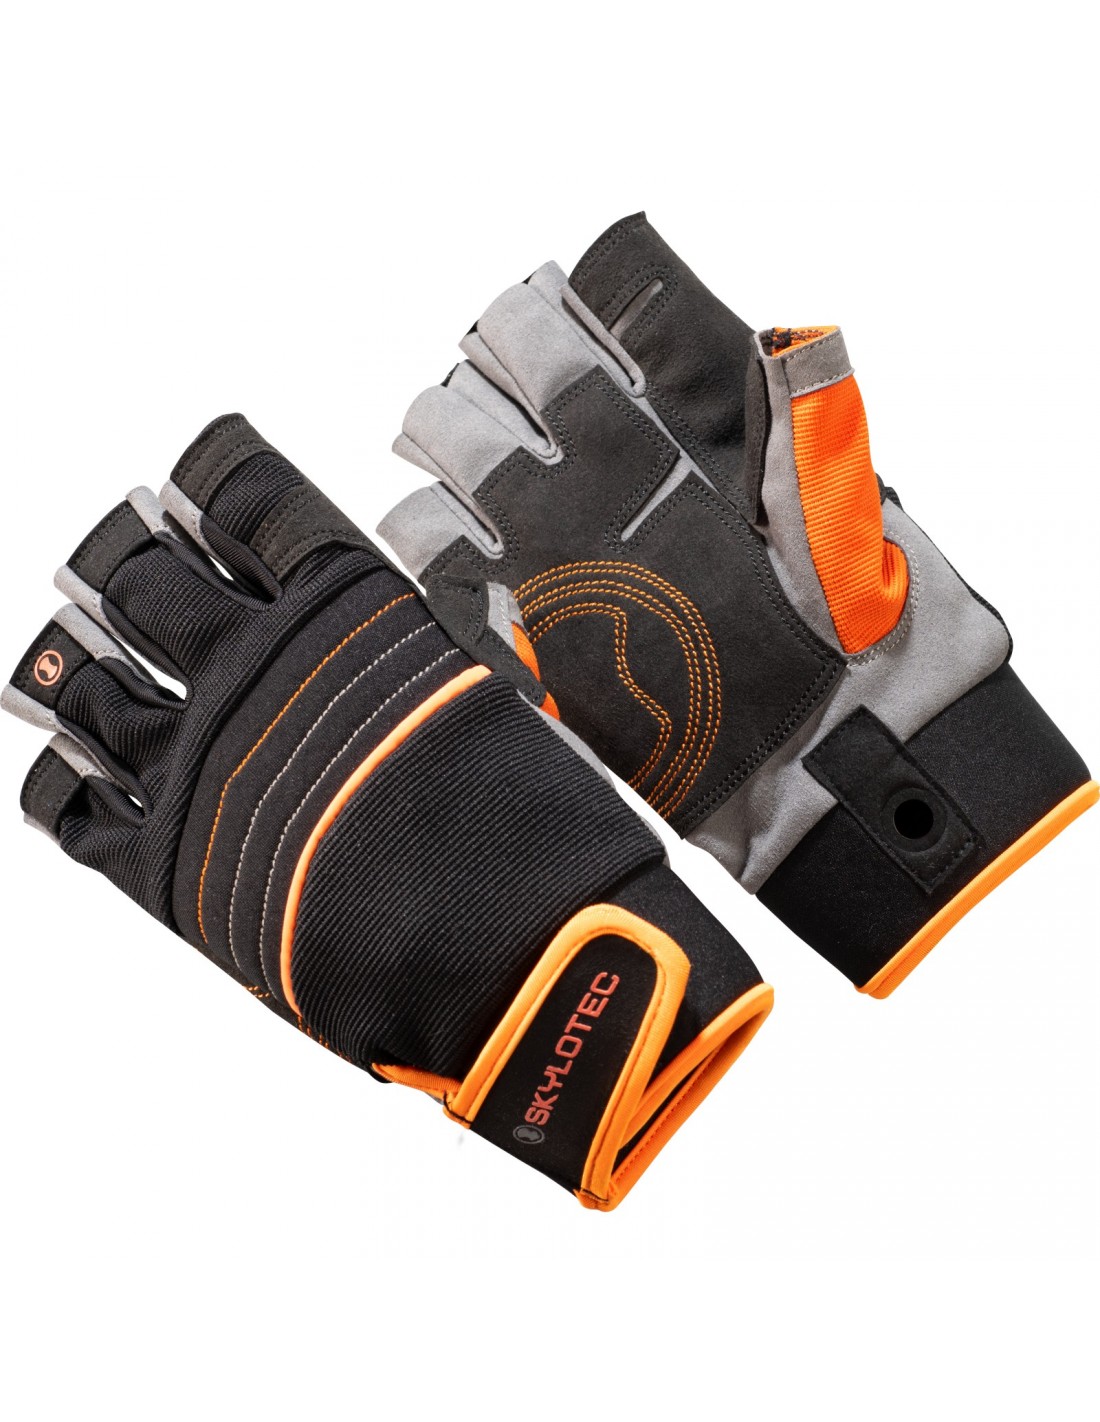 Skylotec Klettersteighandschuhe Skygrip Half Finger Handschuhgröße - L, günstig online kaufen